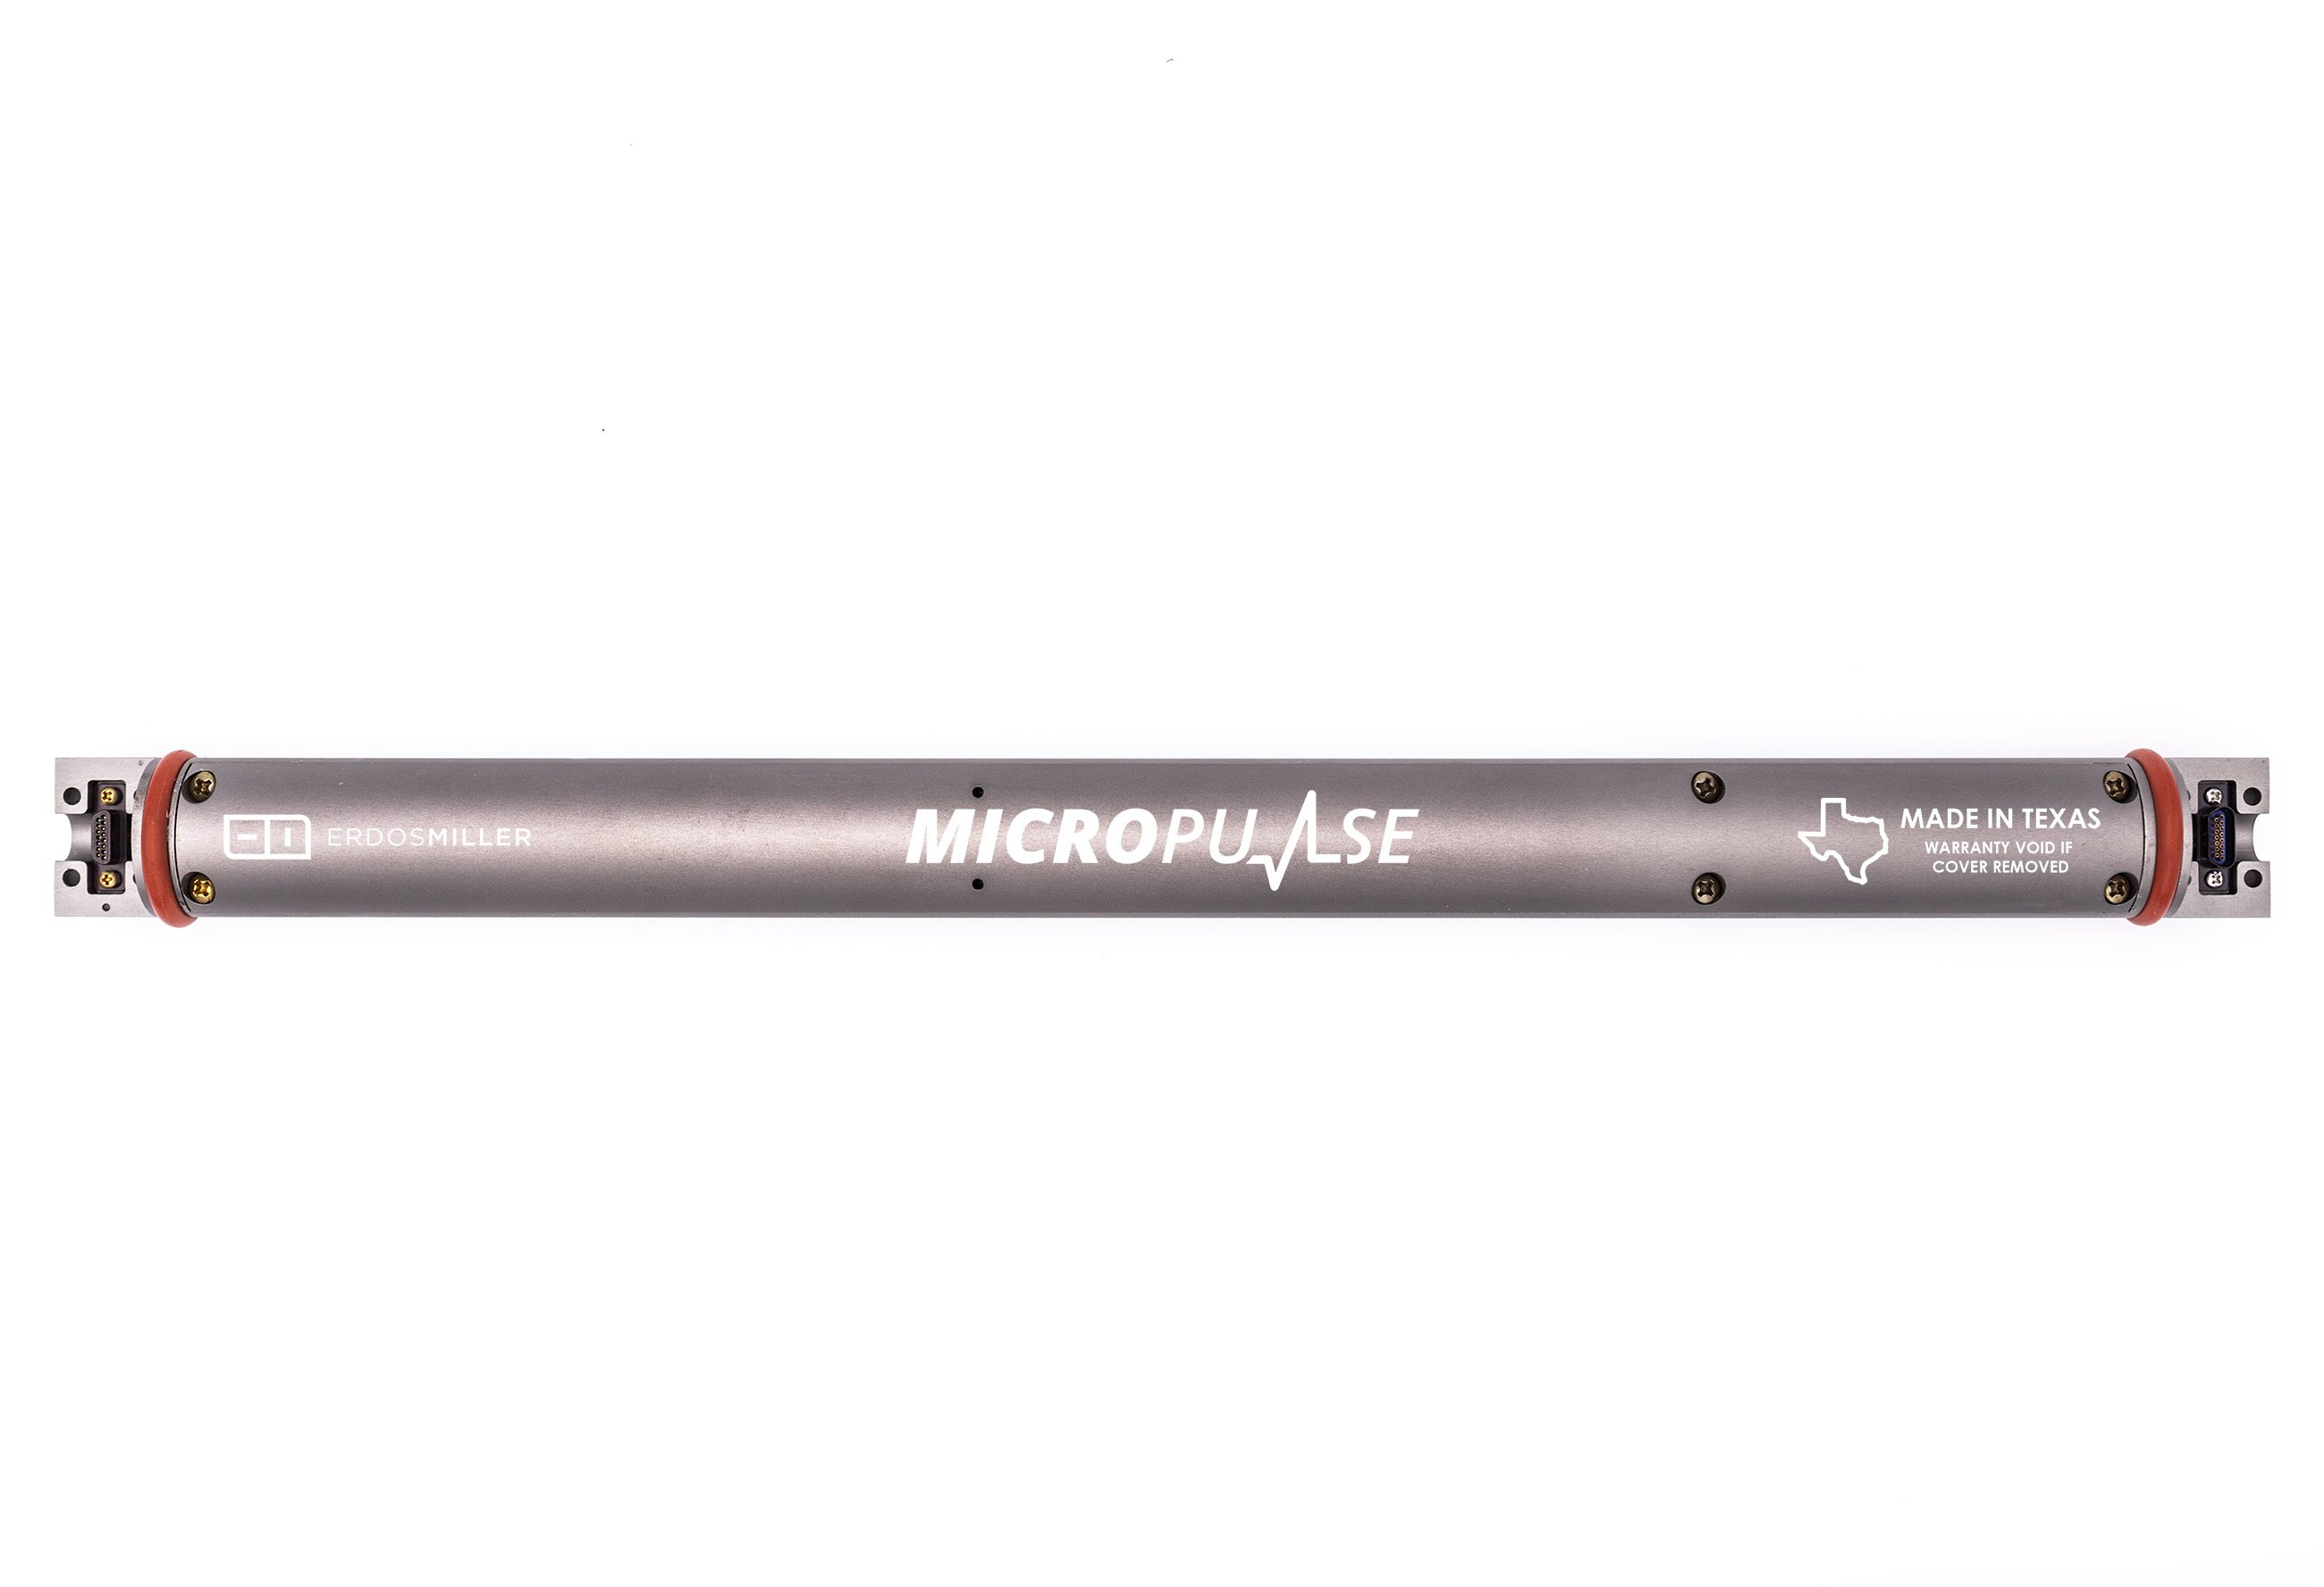 ErdosMiller_Micropulse-directional-sensor_MP3